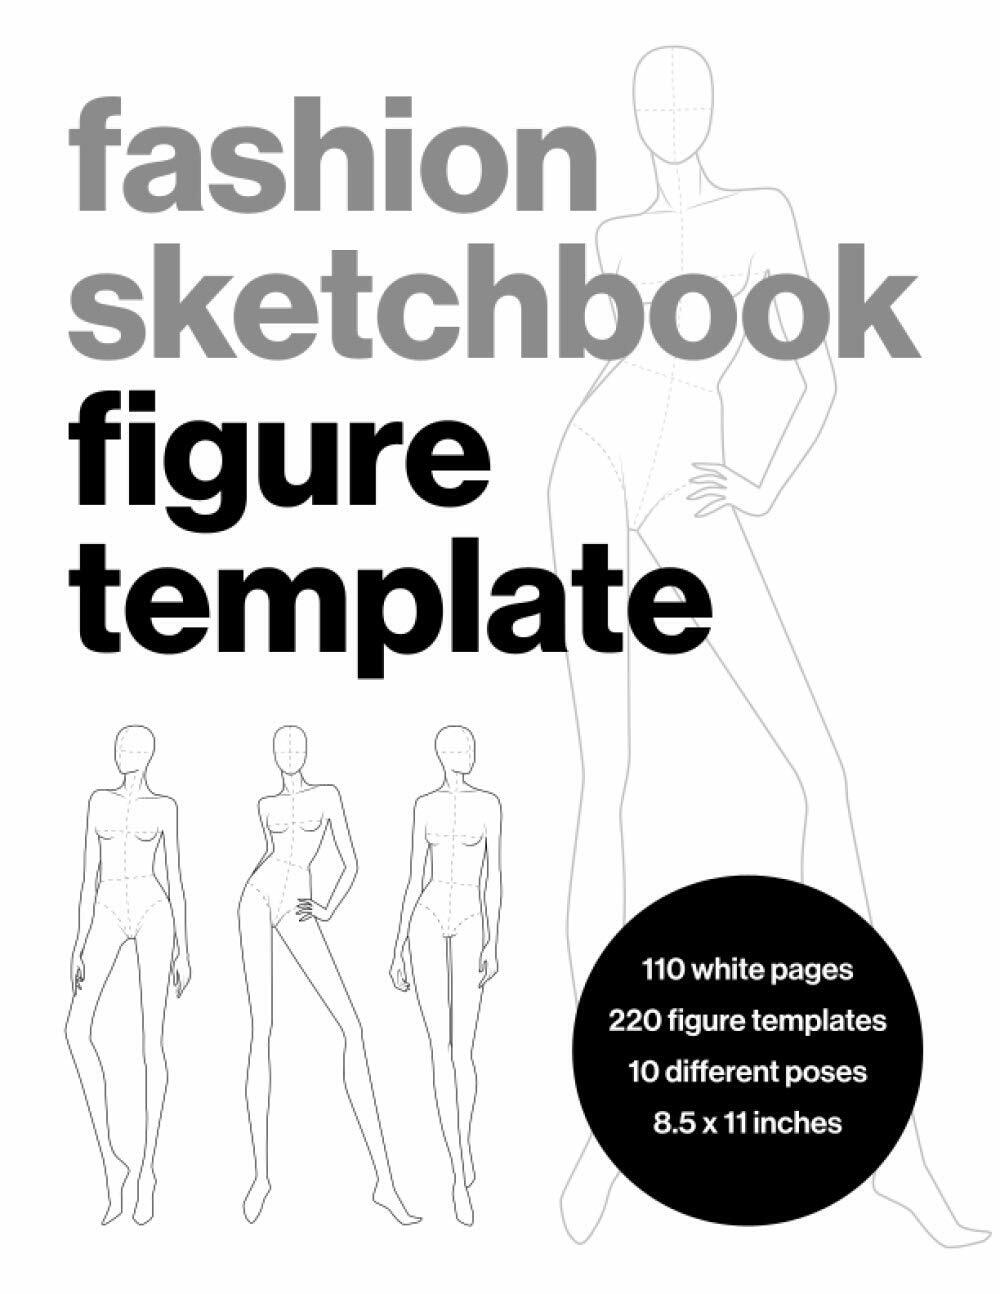 Fashion Sketchbook Figure Template: 220 Female Fashion Design Figure Templates (10 poses) (Paperback)